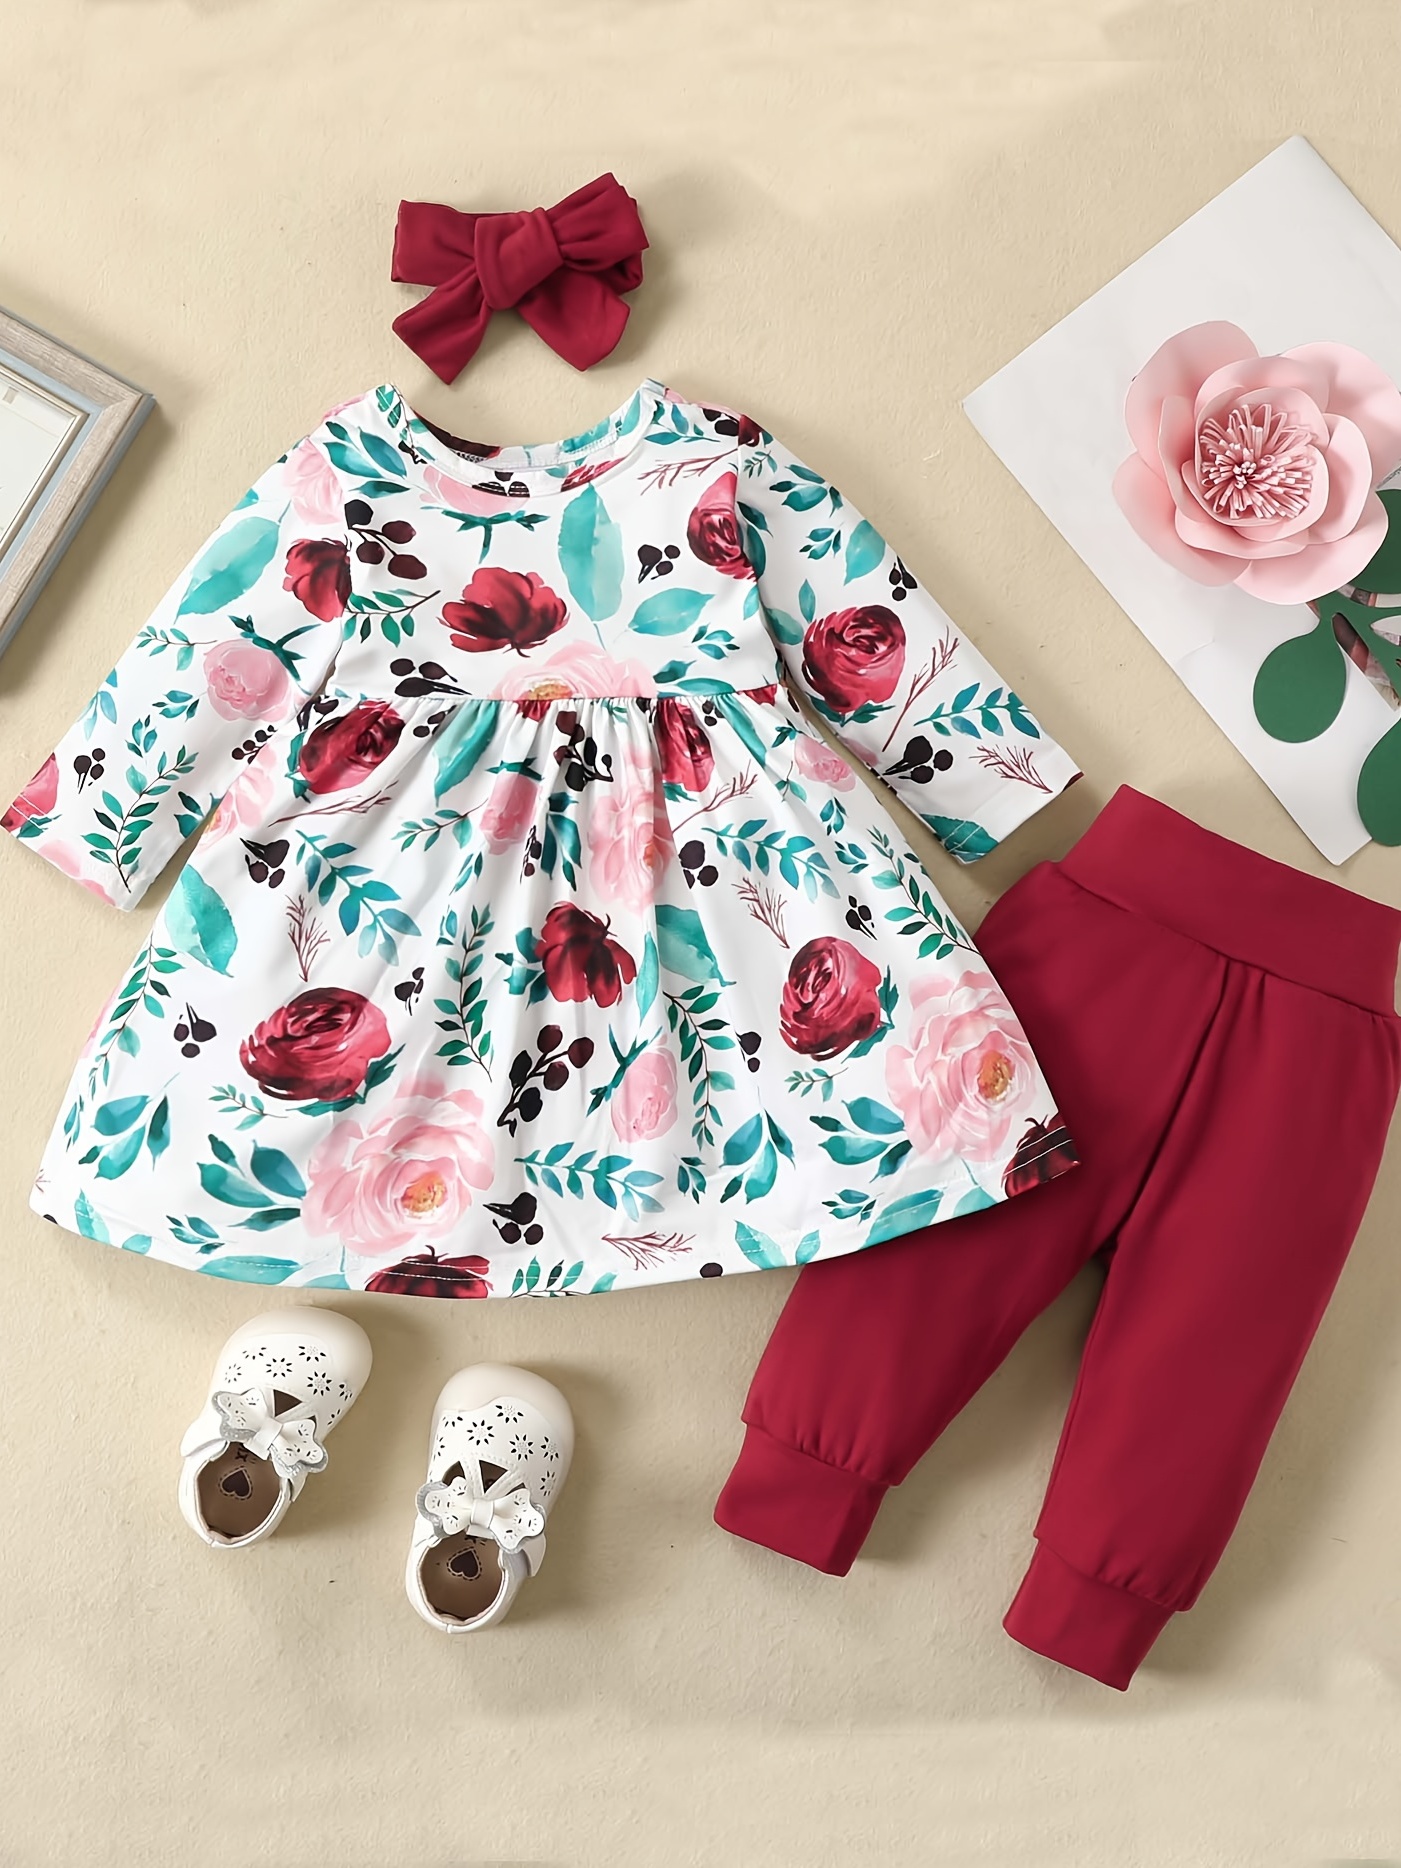 Baby Girl Christmas Outfit - Elegant Floral Print Dress, Pants, and Headband